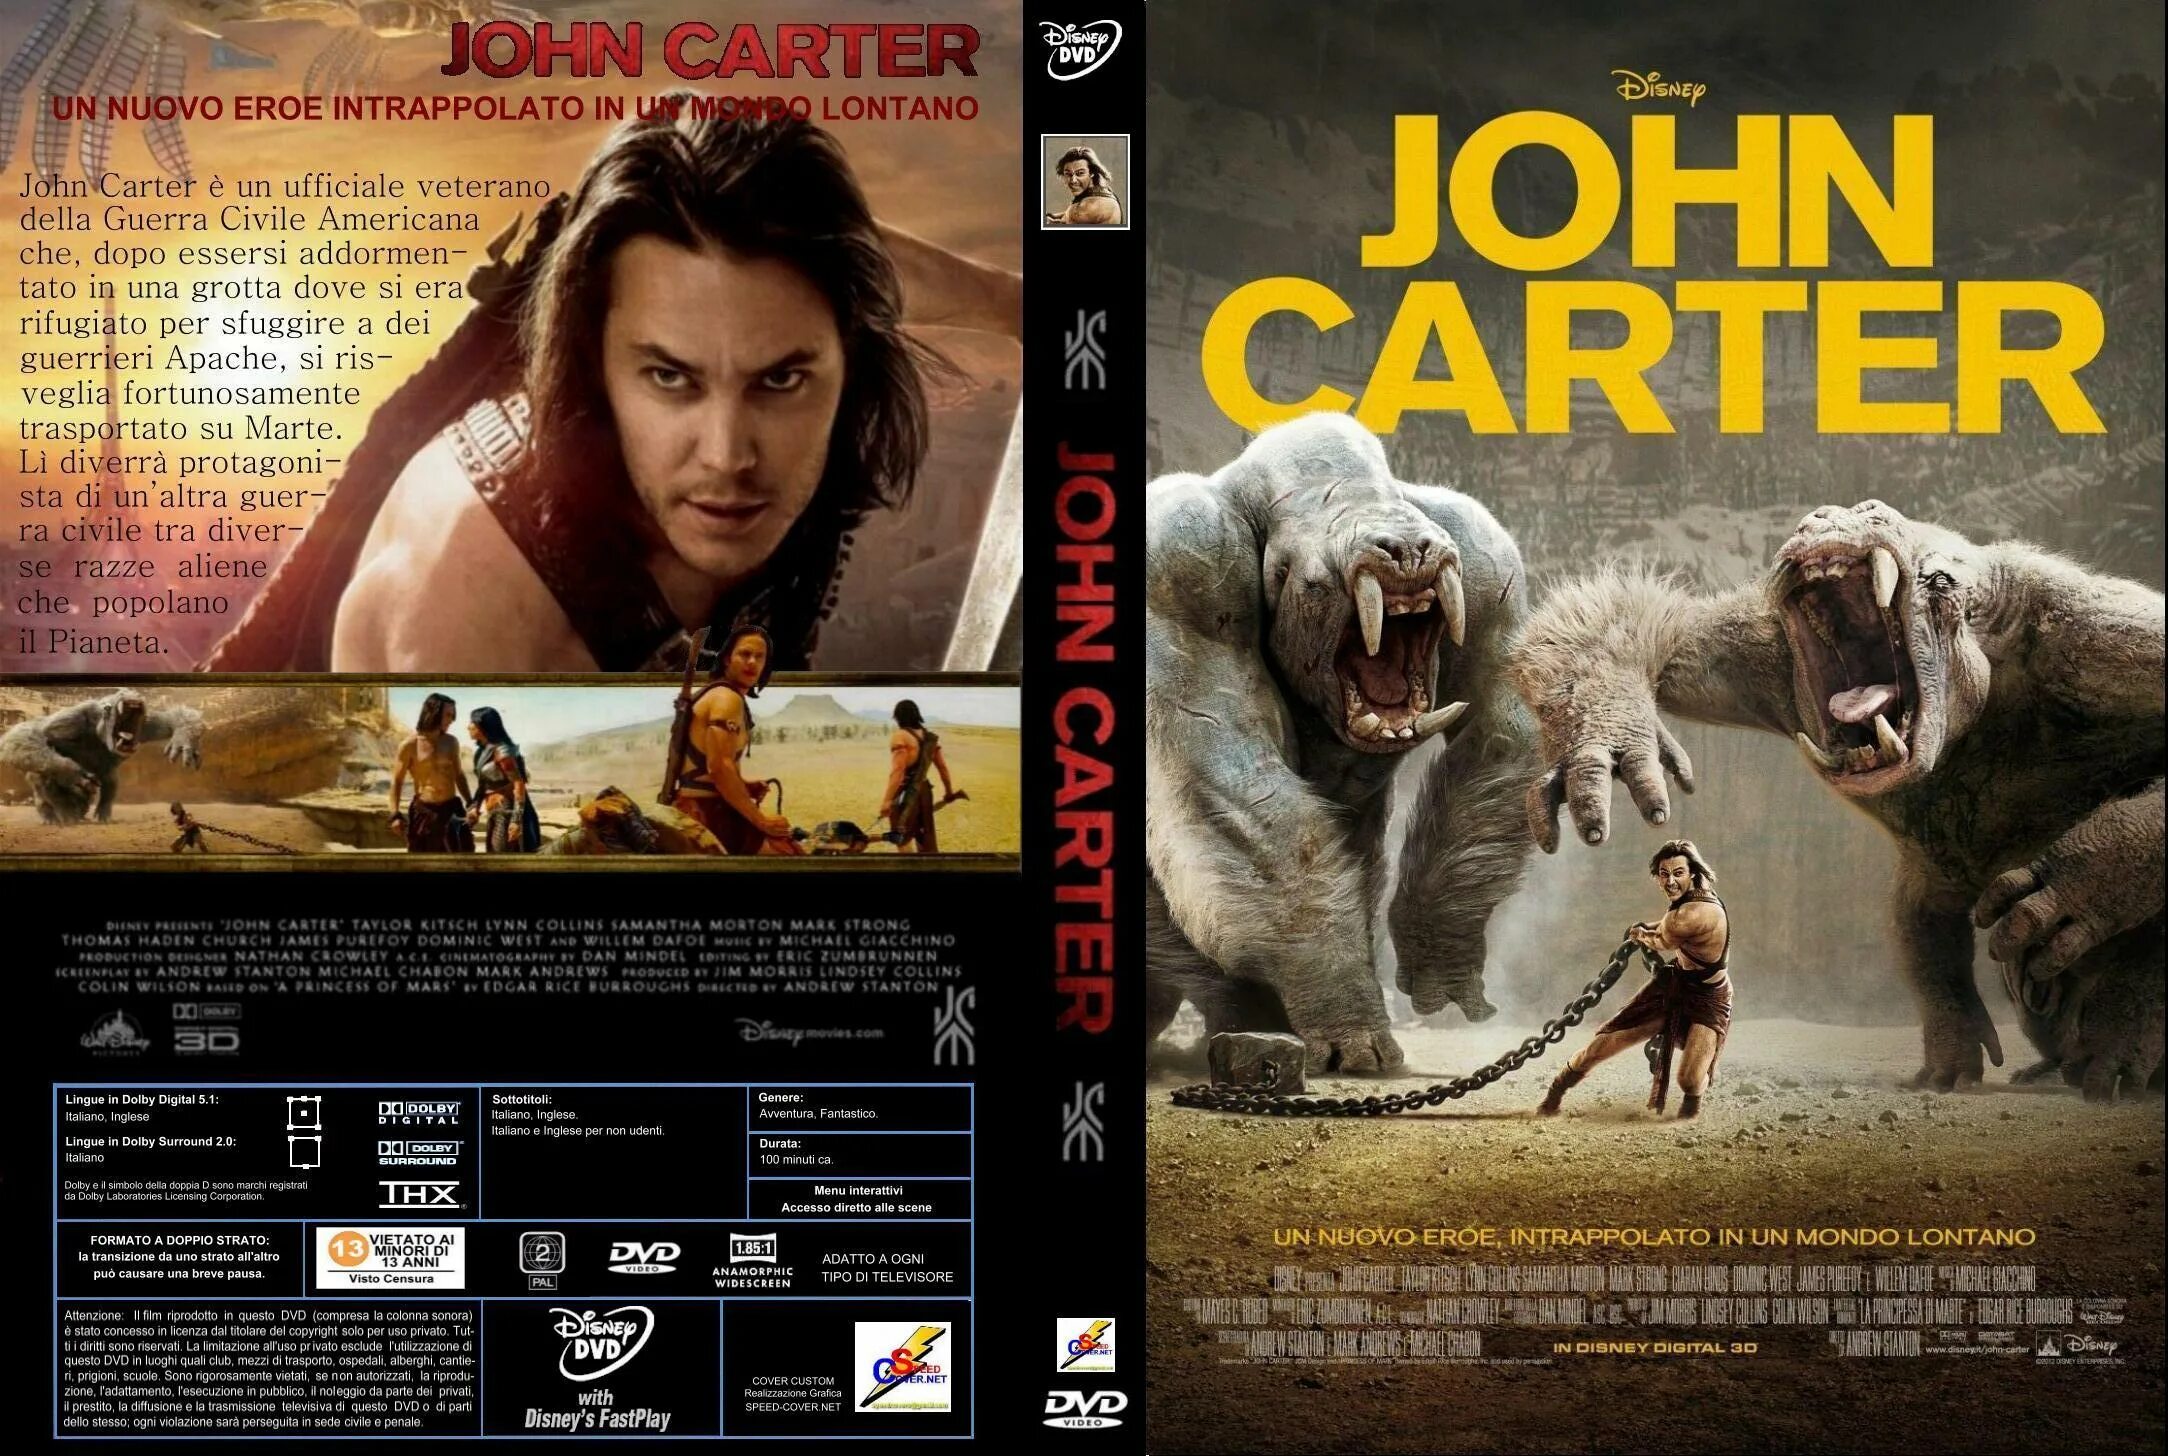 Обложка для двд John Carter. John Carter 2012. Джон Картер (2012) Blu ray Cover. Джон Картер обложка. 2012 обложка